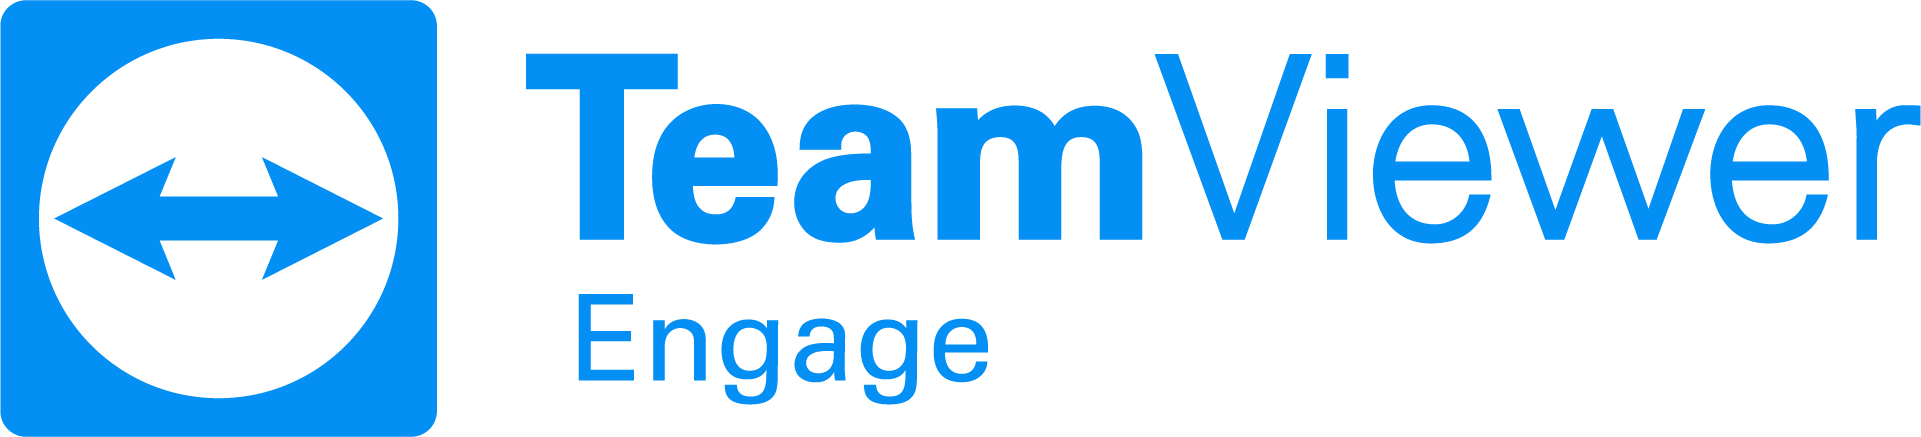 Teamviewer engage logo transparent (1)